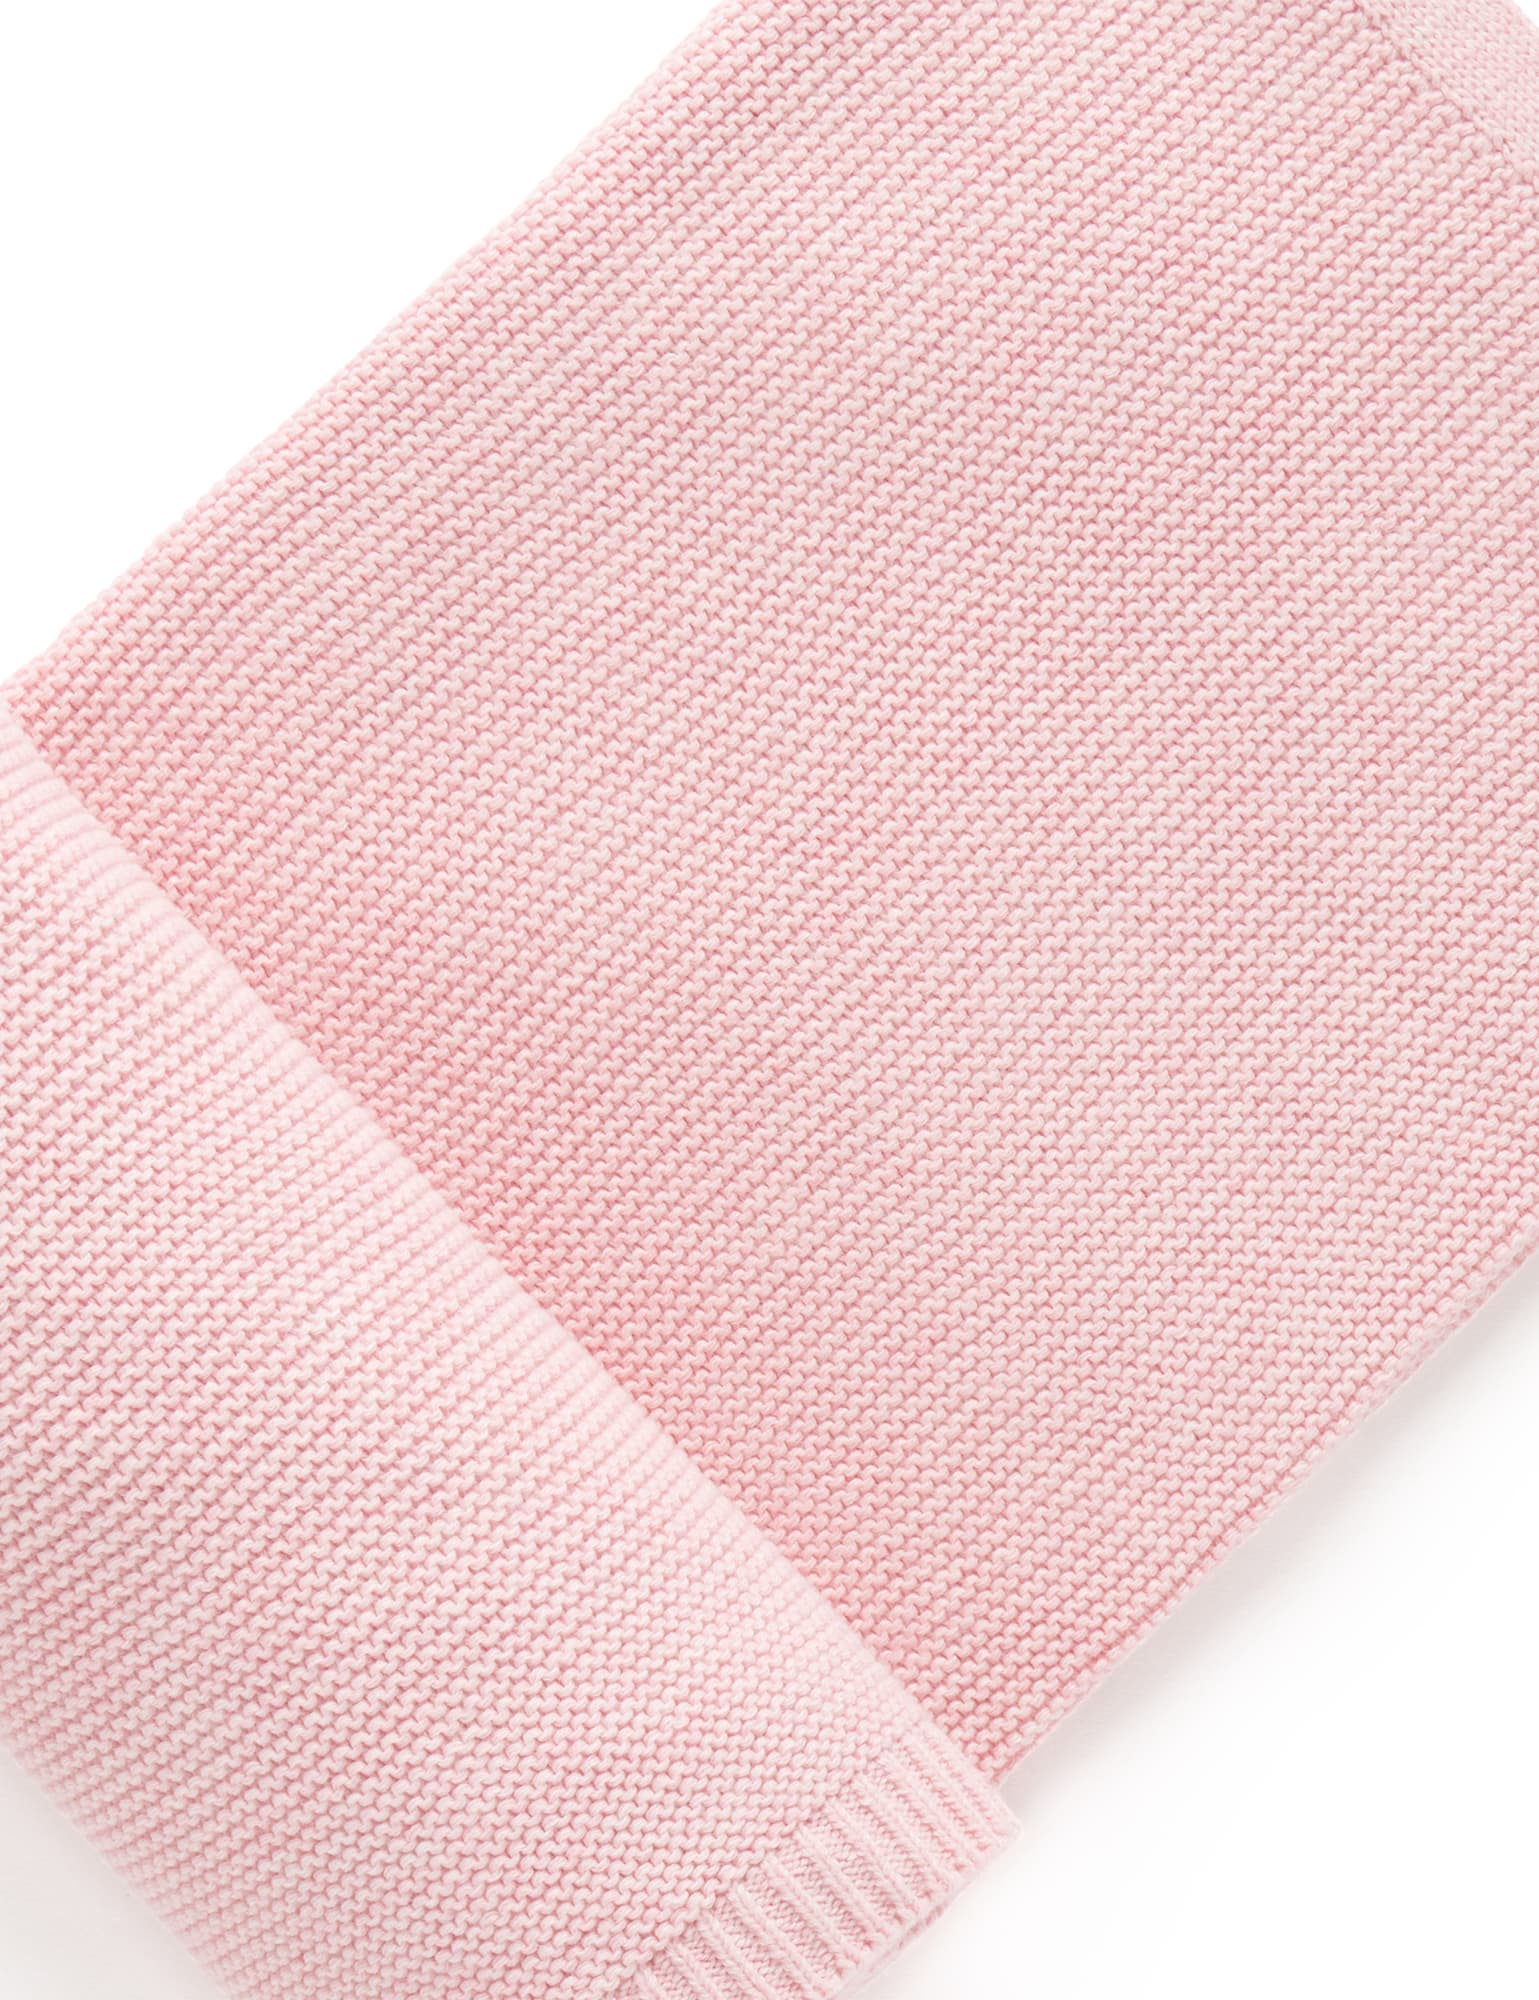 Purebaby Textured Blanket - Pink